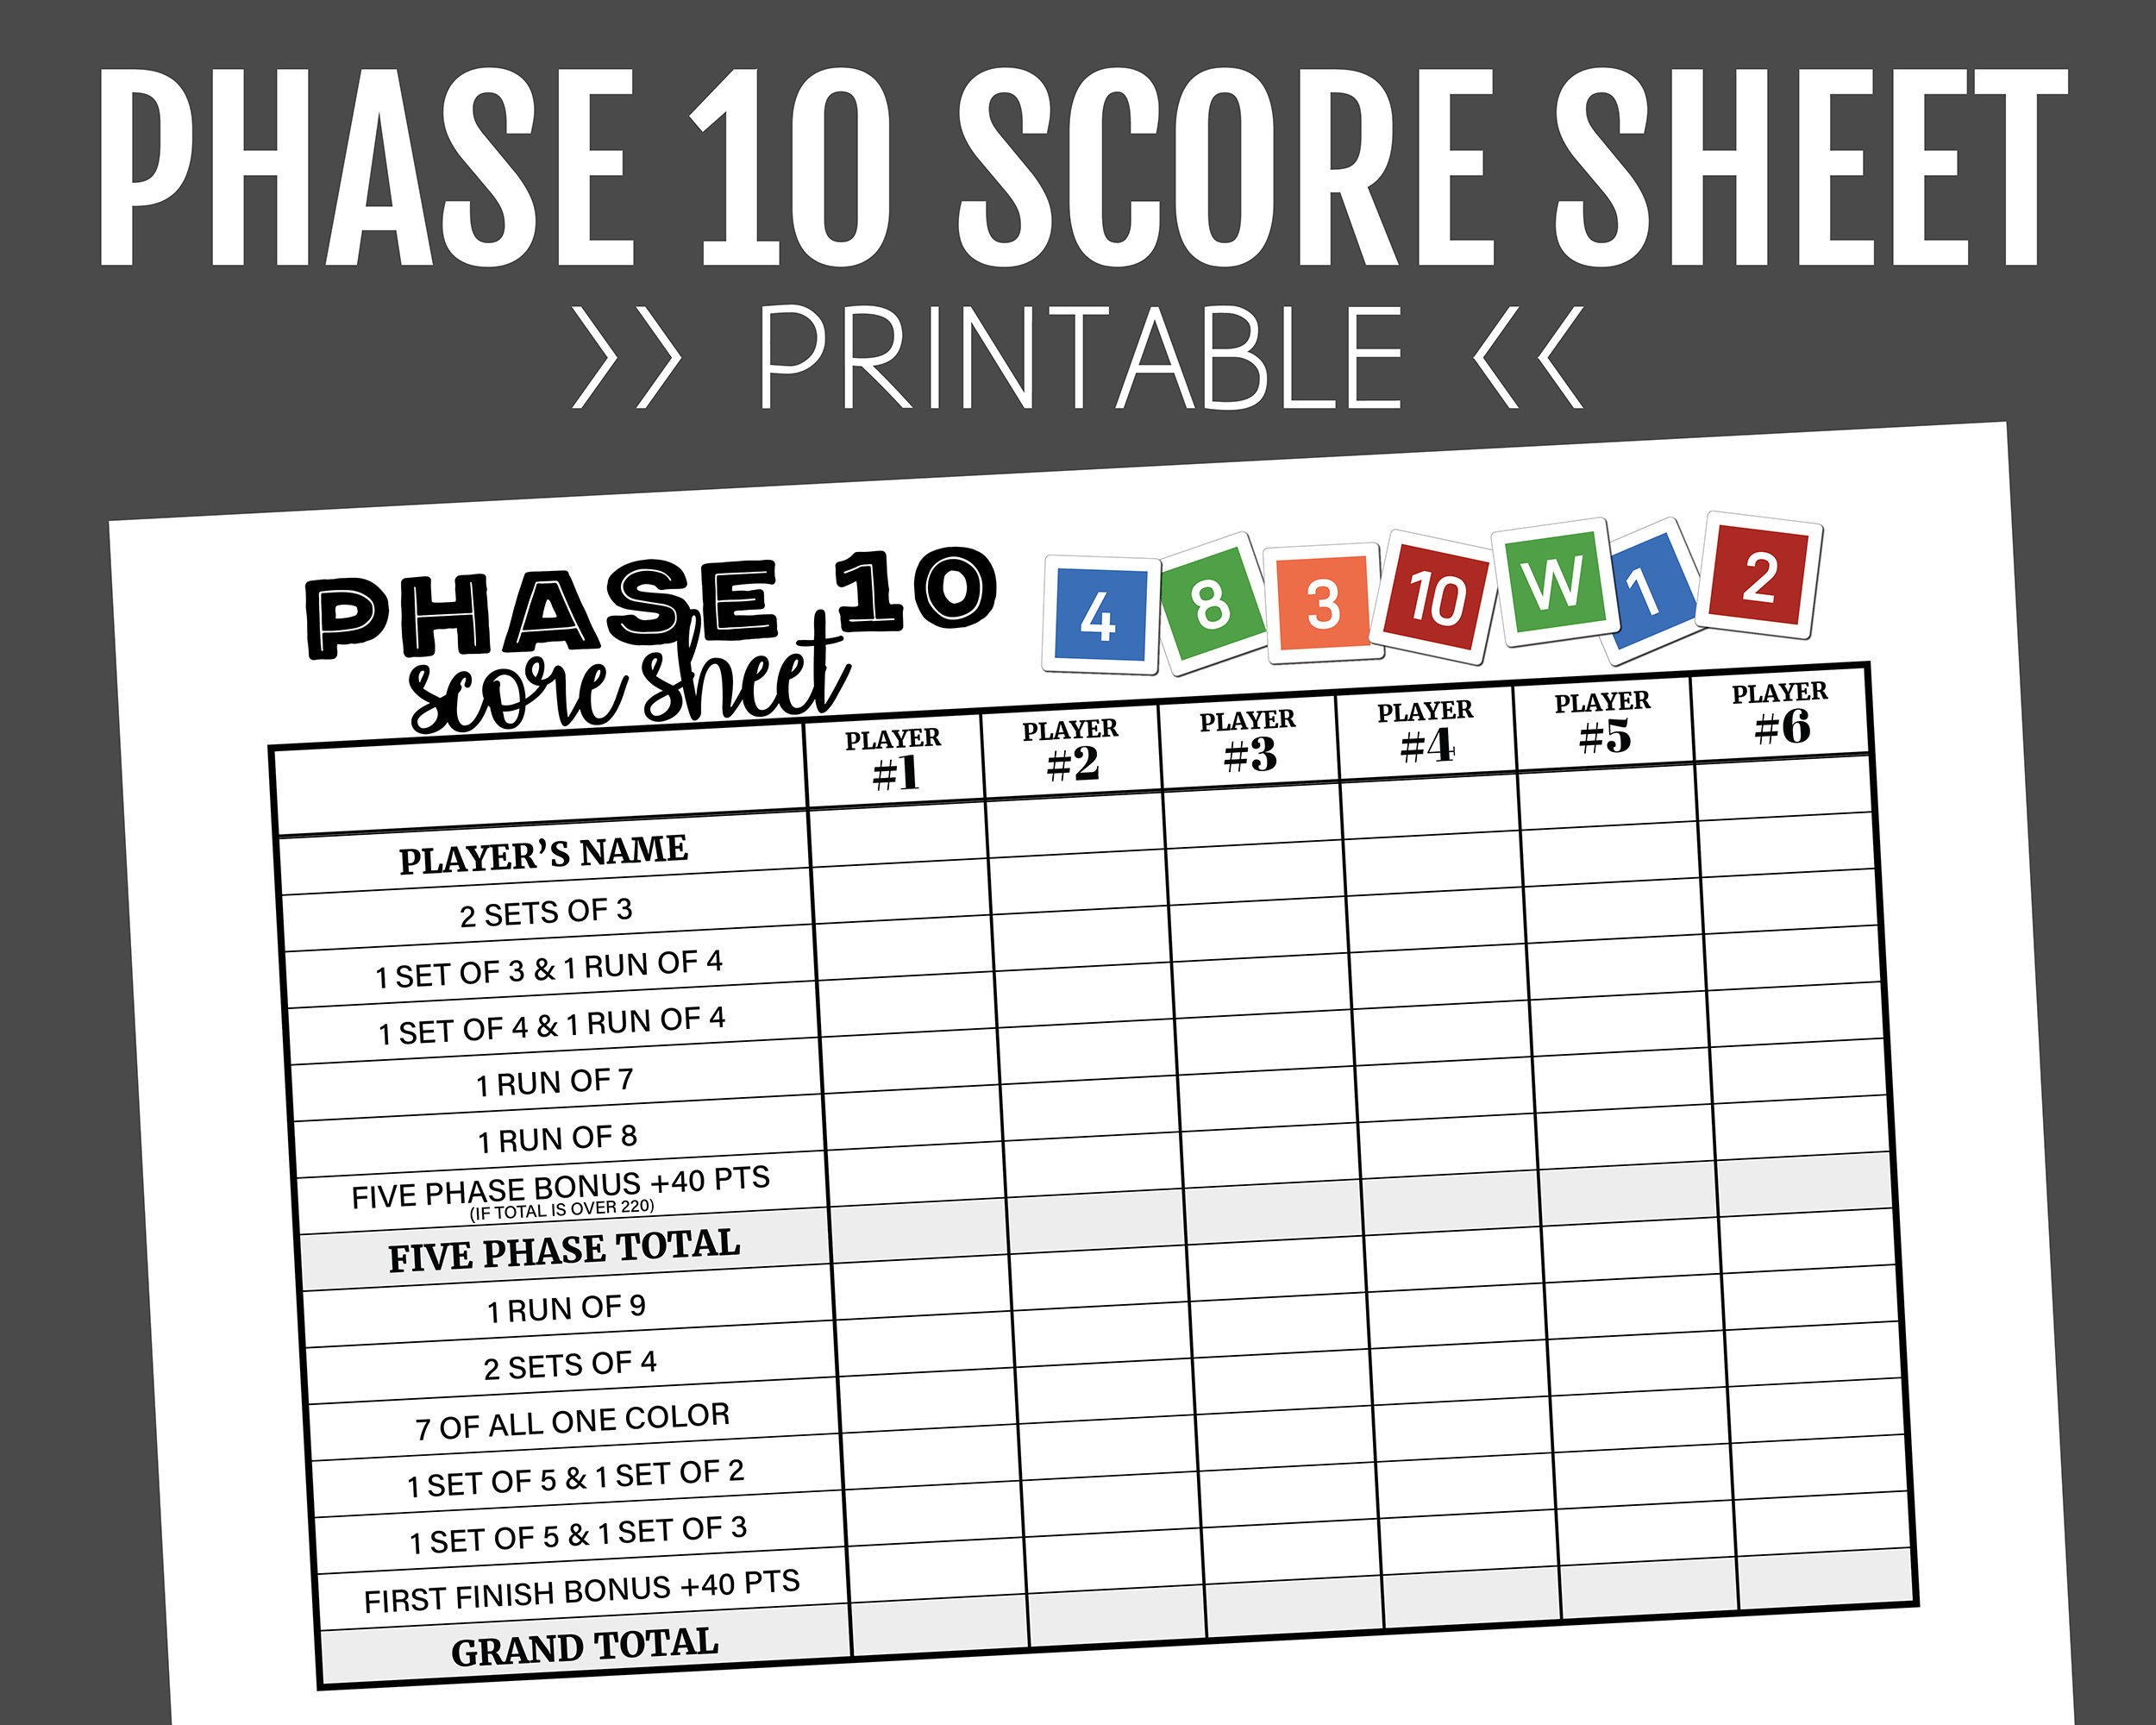 phase-10-score-sheet-printable-score-sheet-digital-instant-download